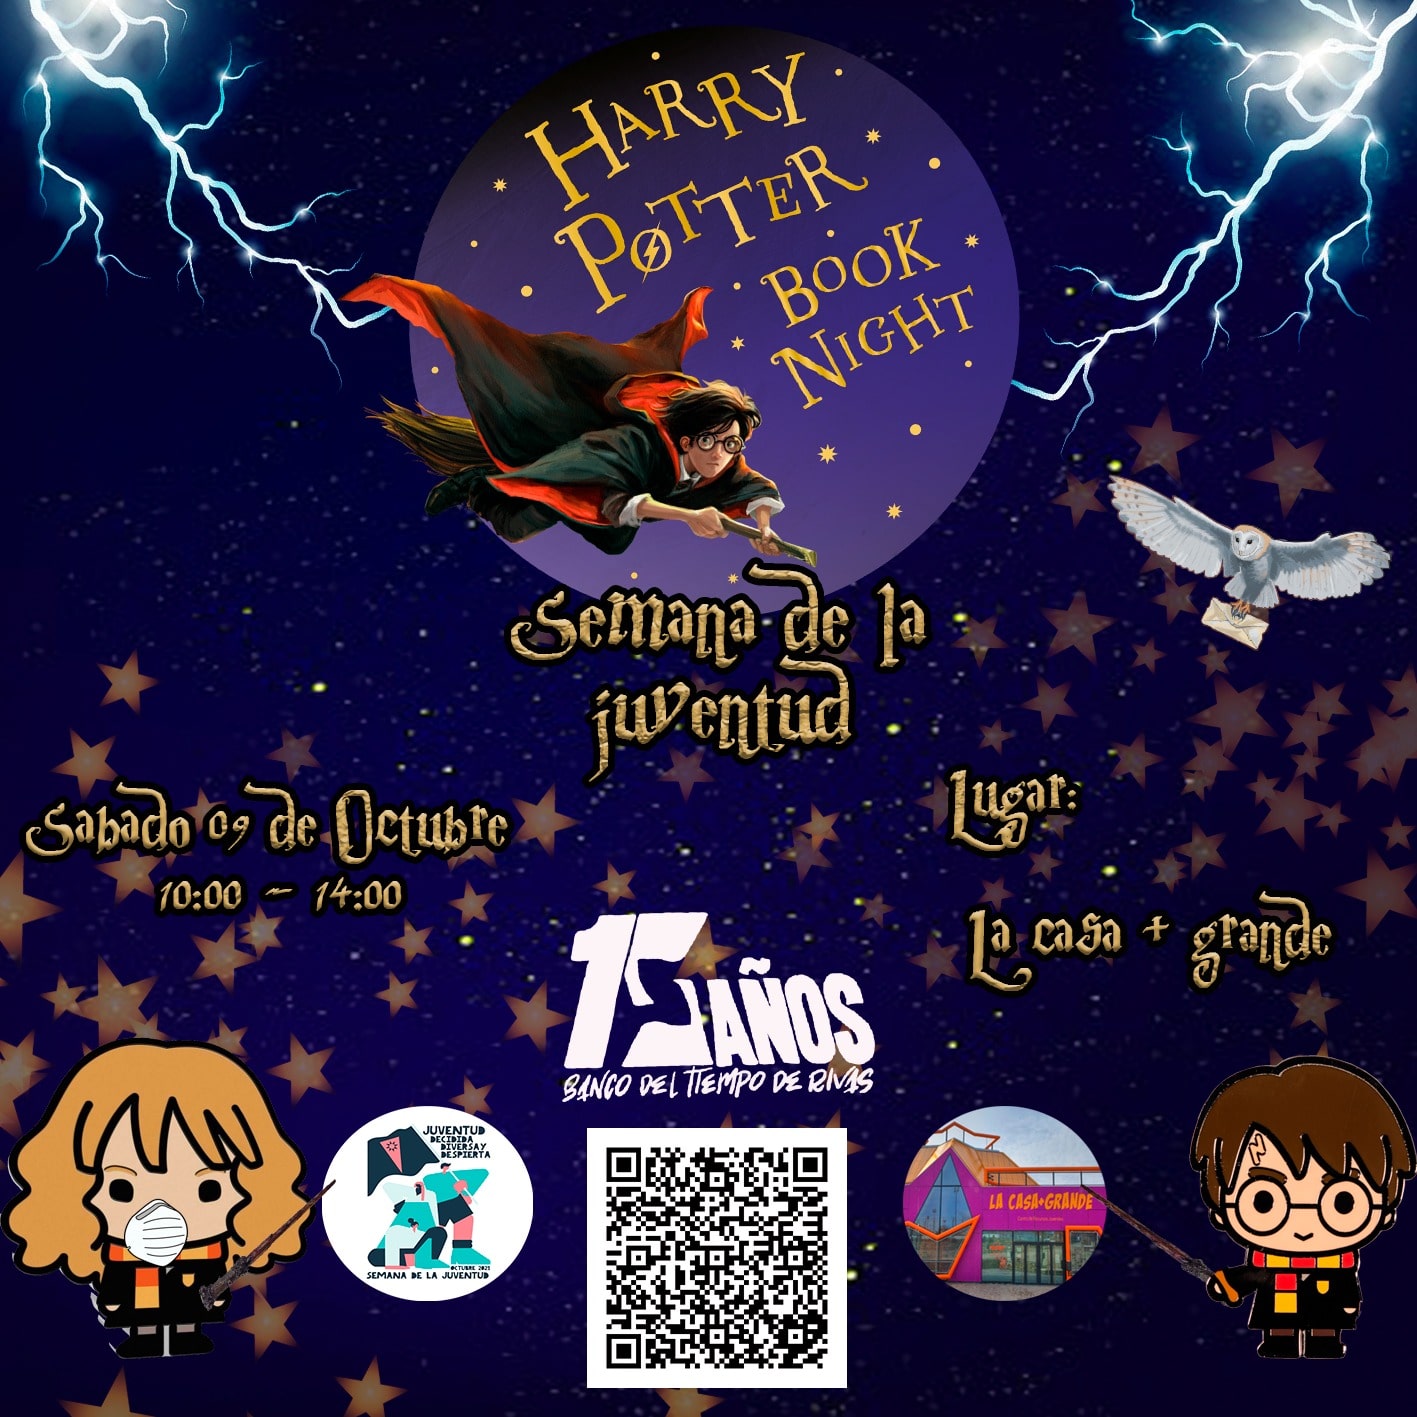 Harry Potter Book Night Rivas